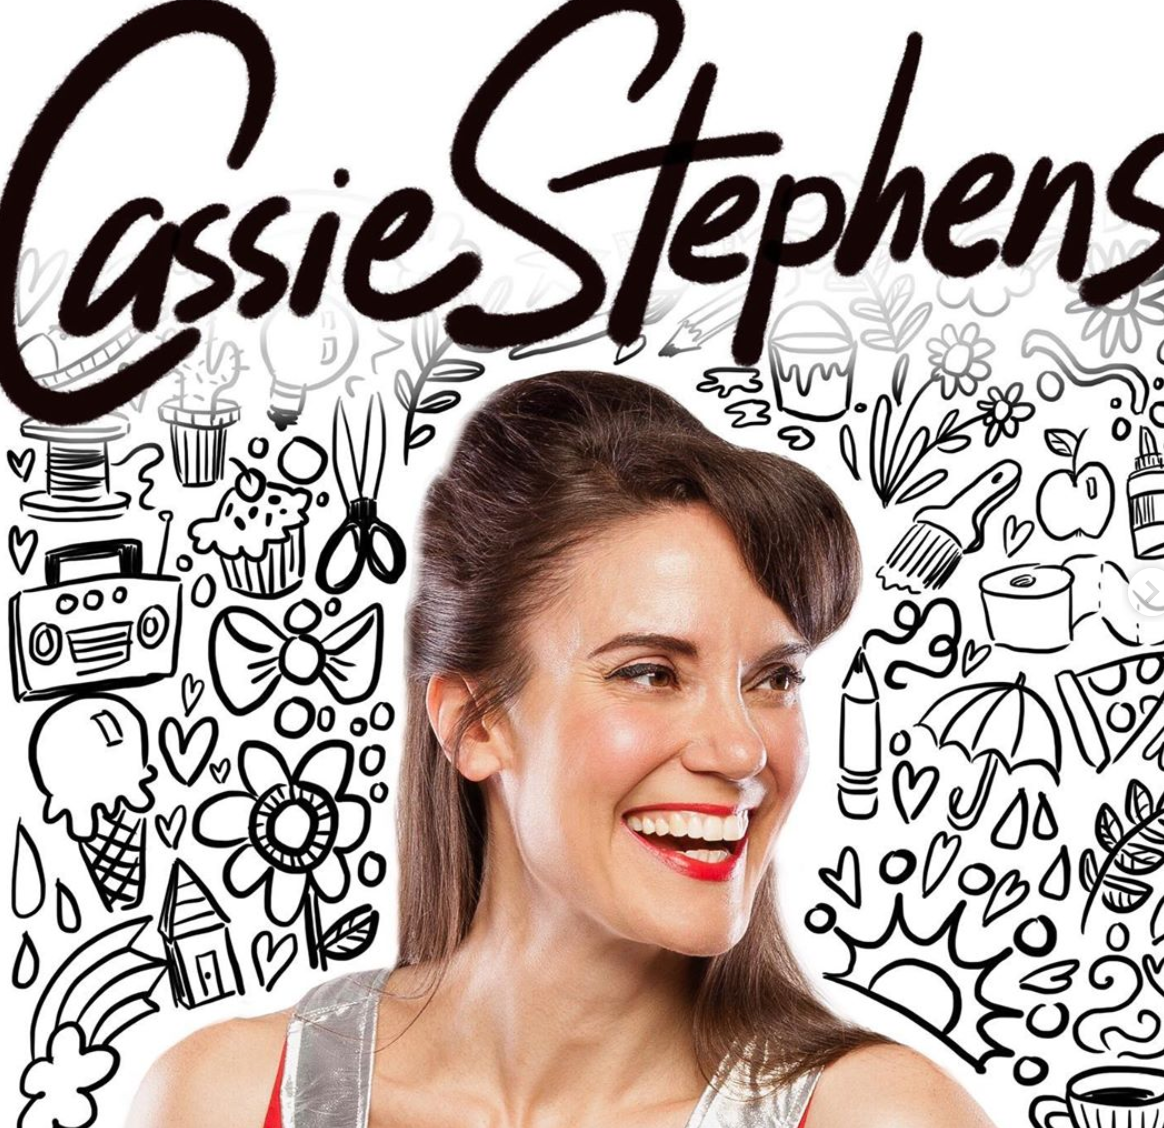 Cassie Stephens – Art Teacherin' with Cassie Stephens